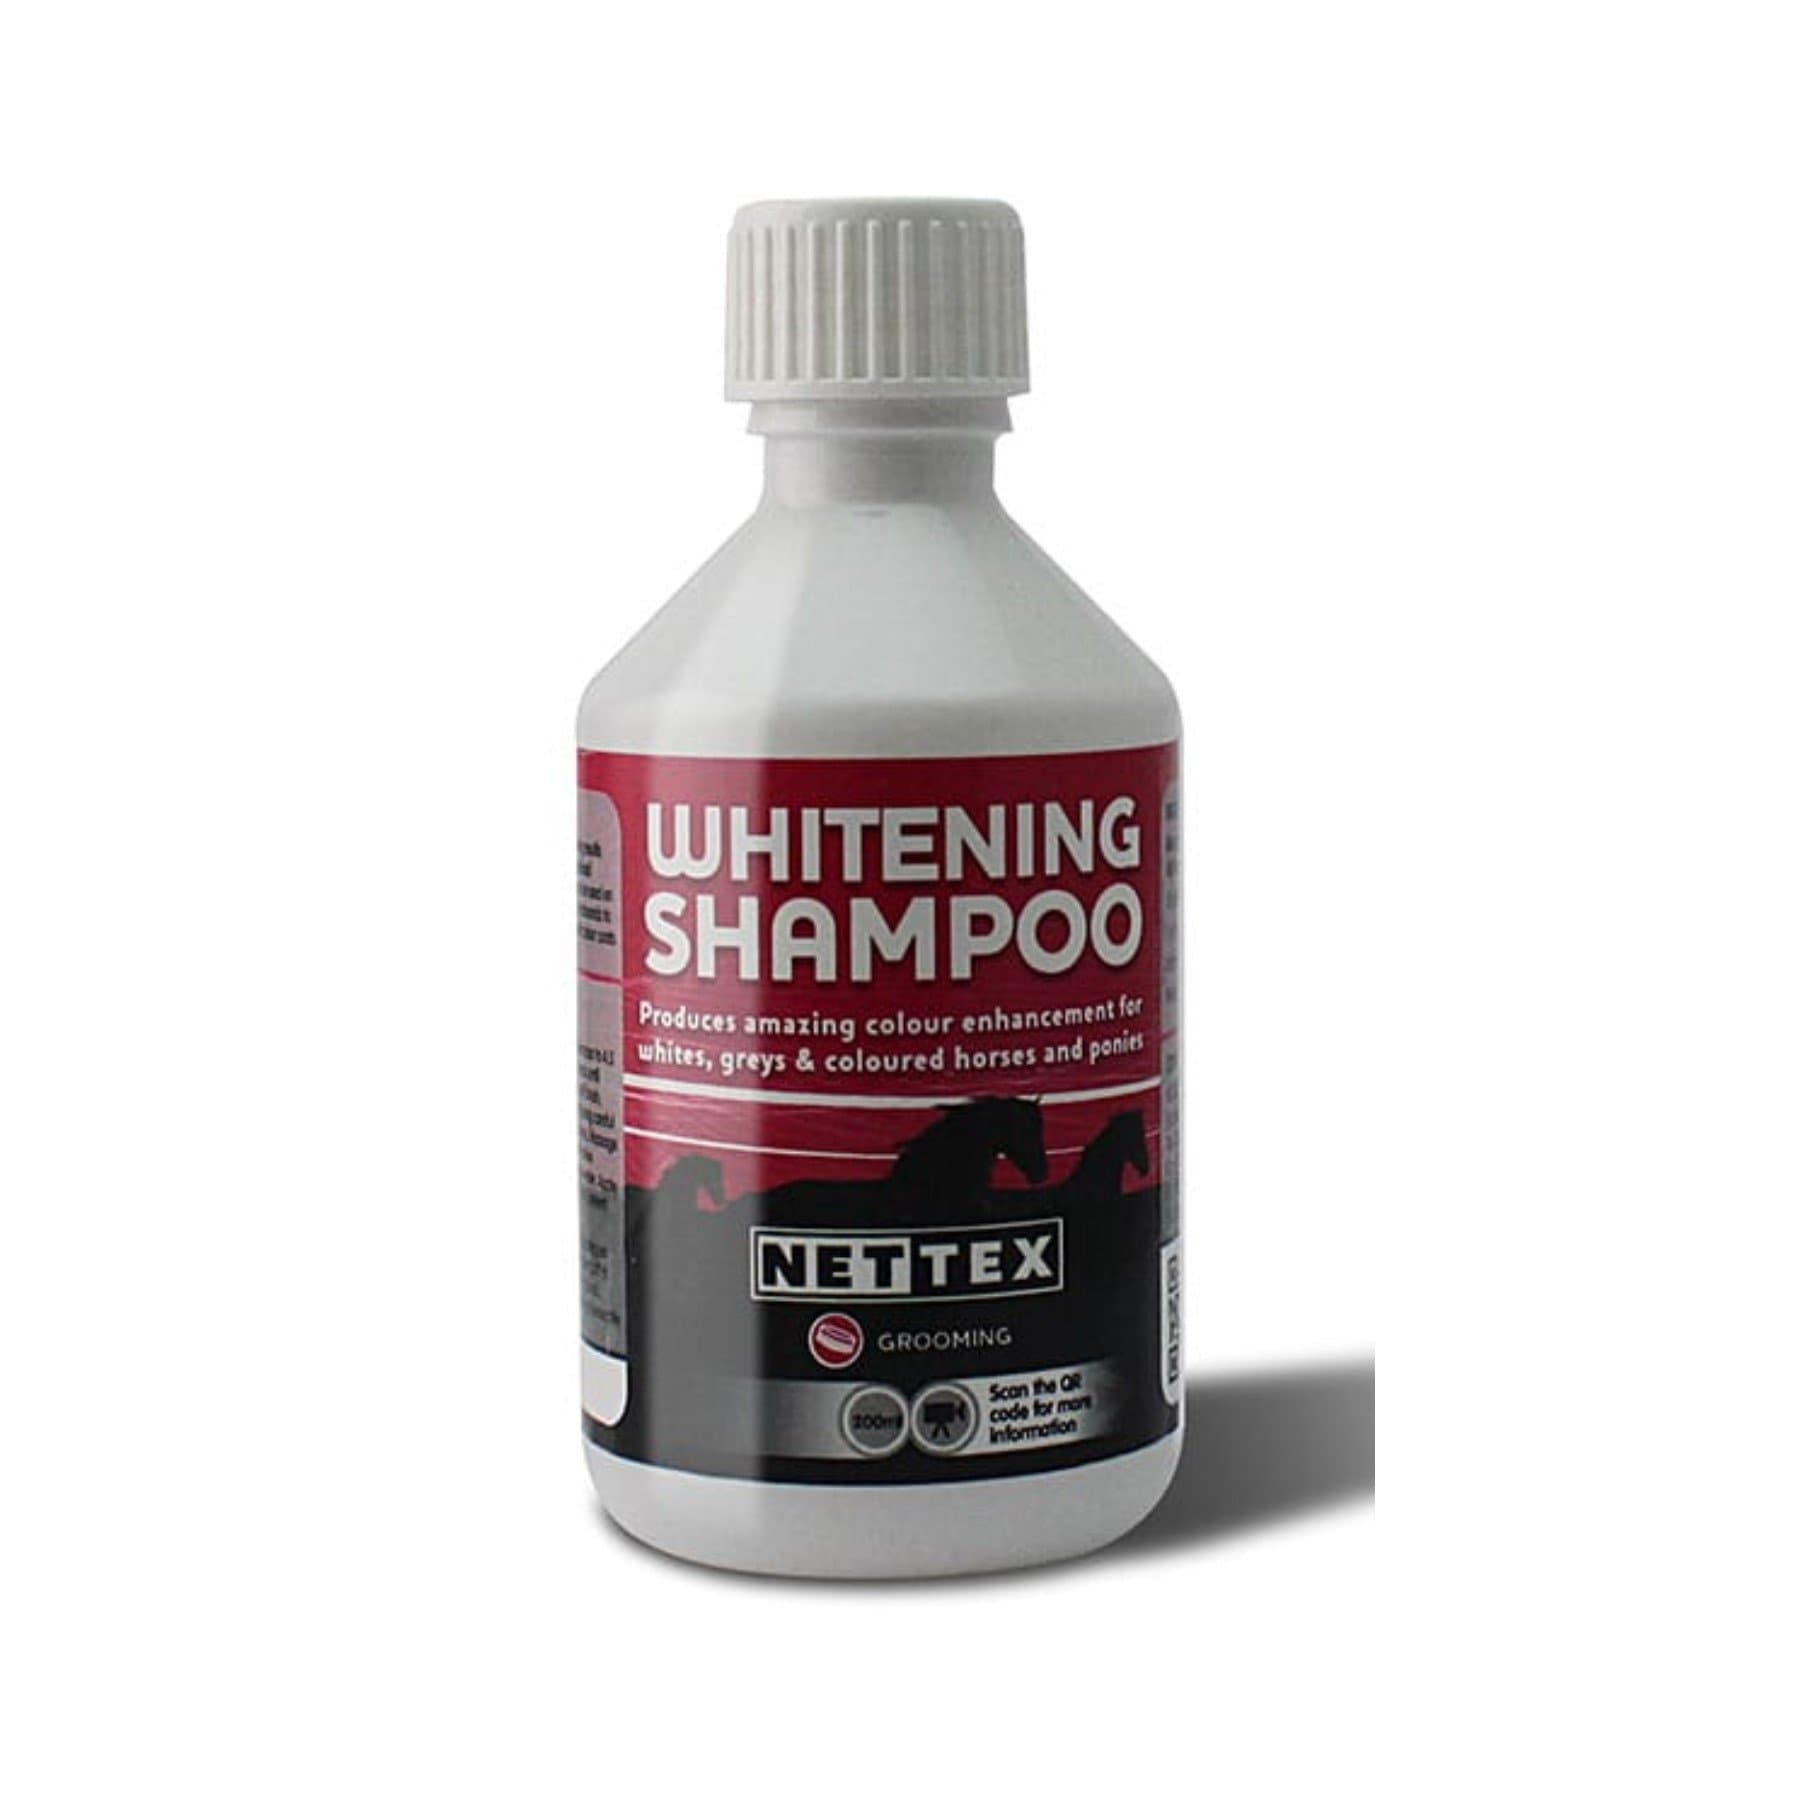 Nettex Whitening Shampoo